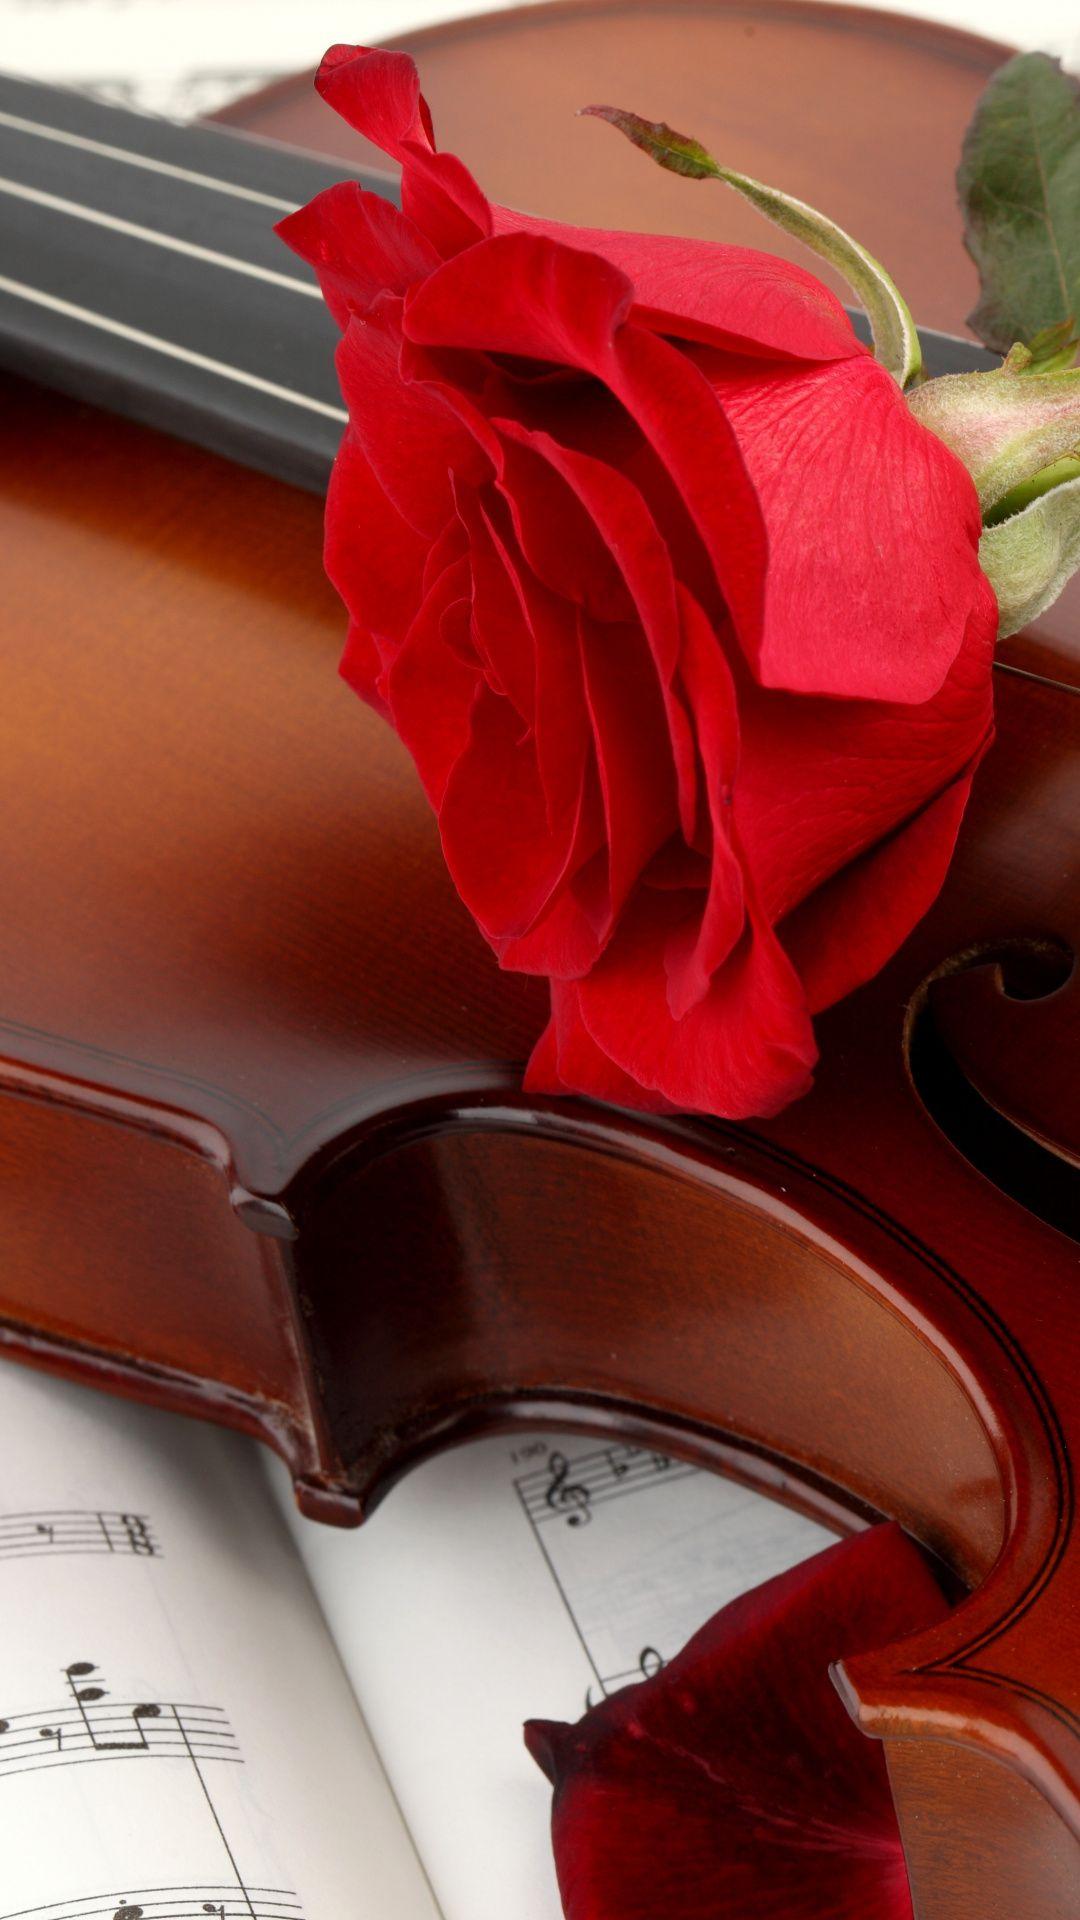 Violin Roses Wallpapers - Top Free Violin Roses Backgrounds ...